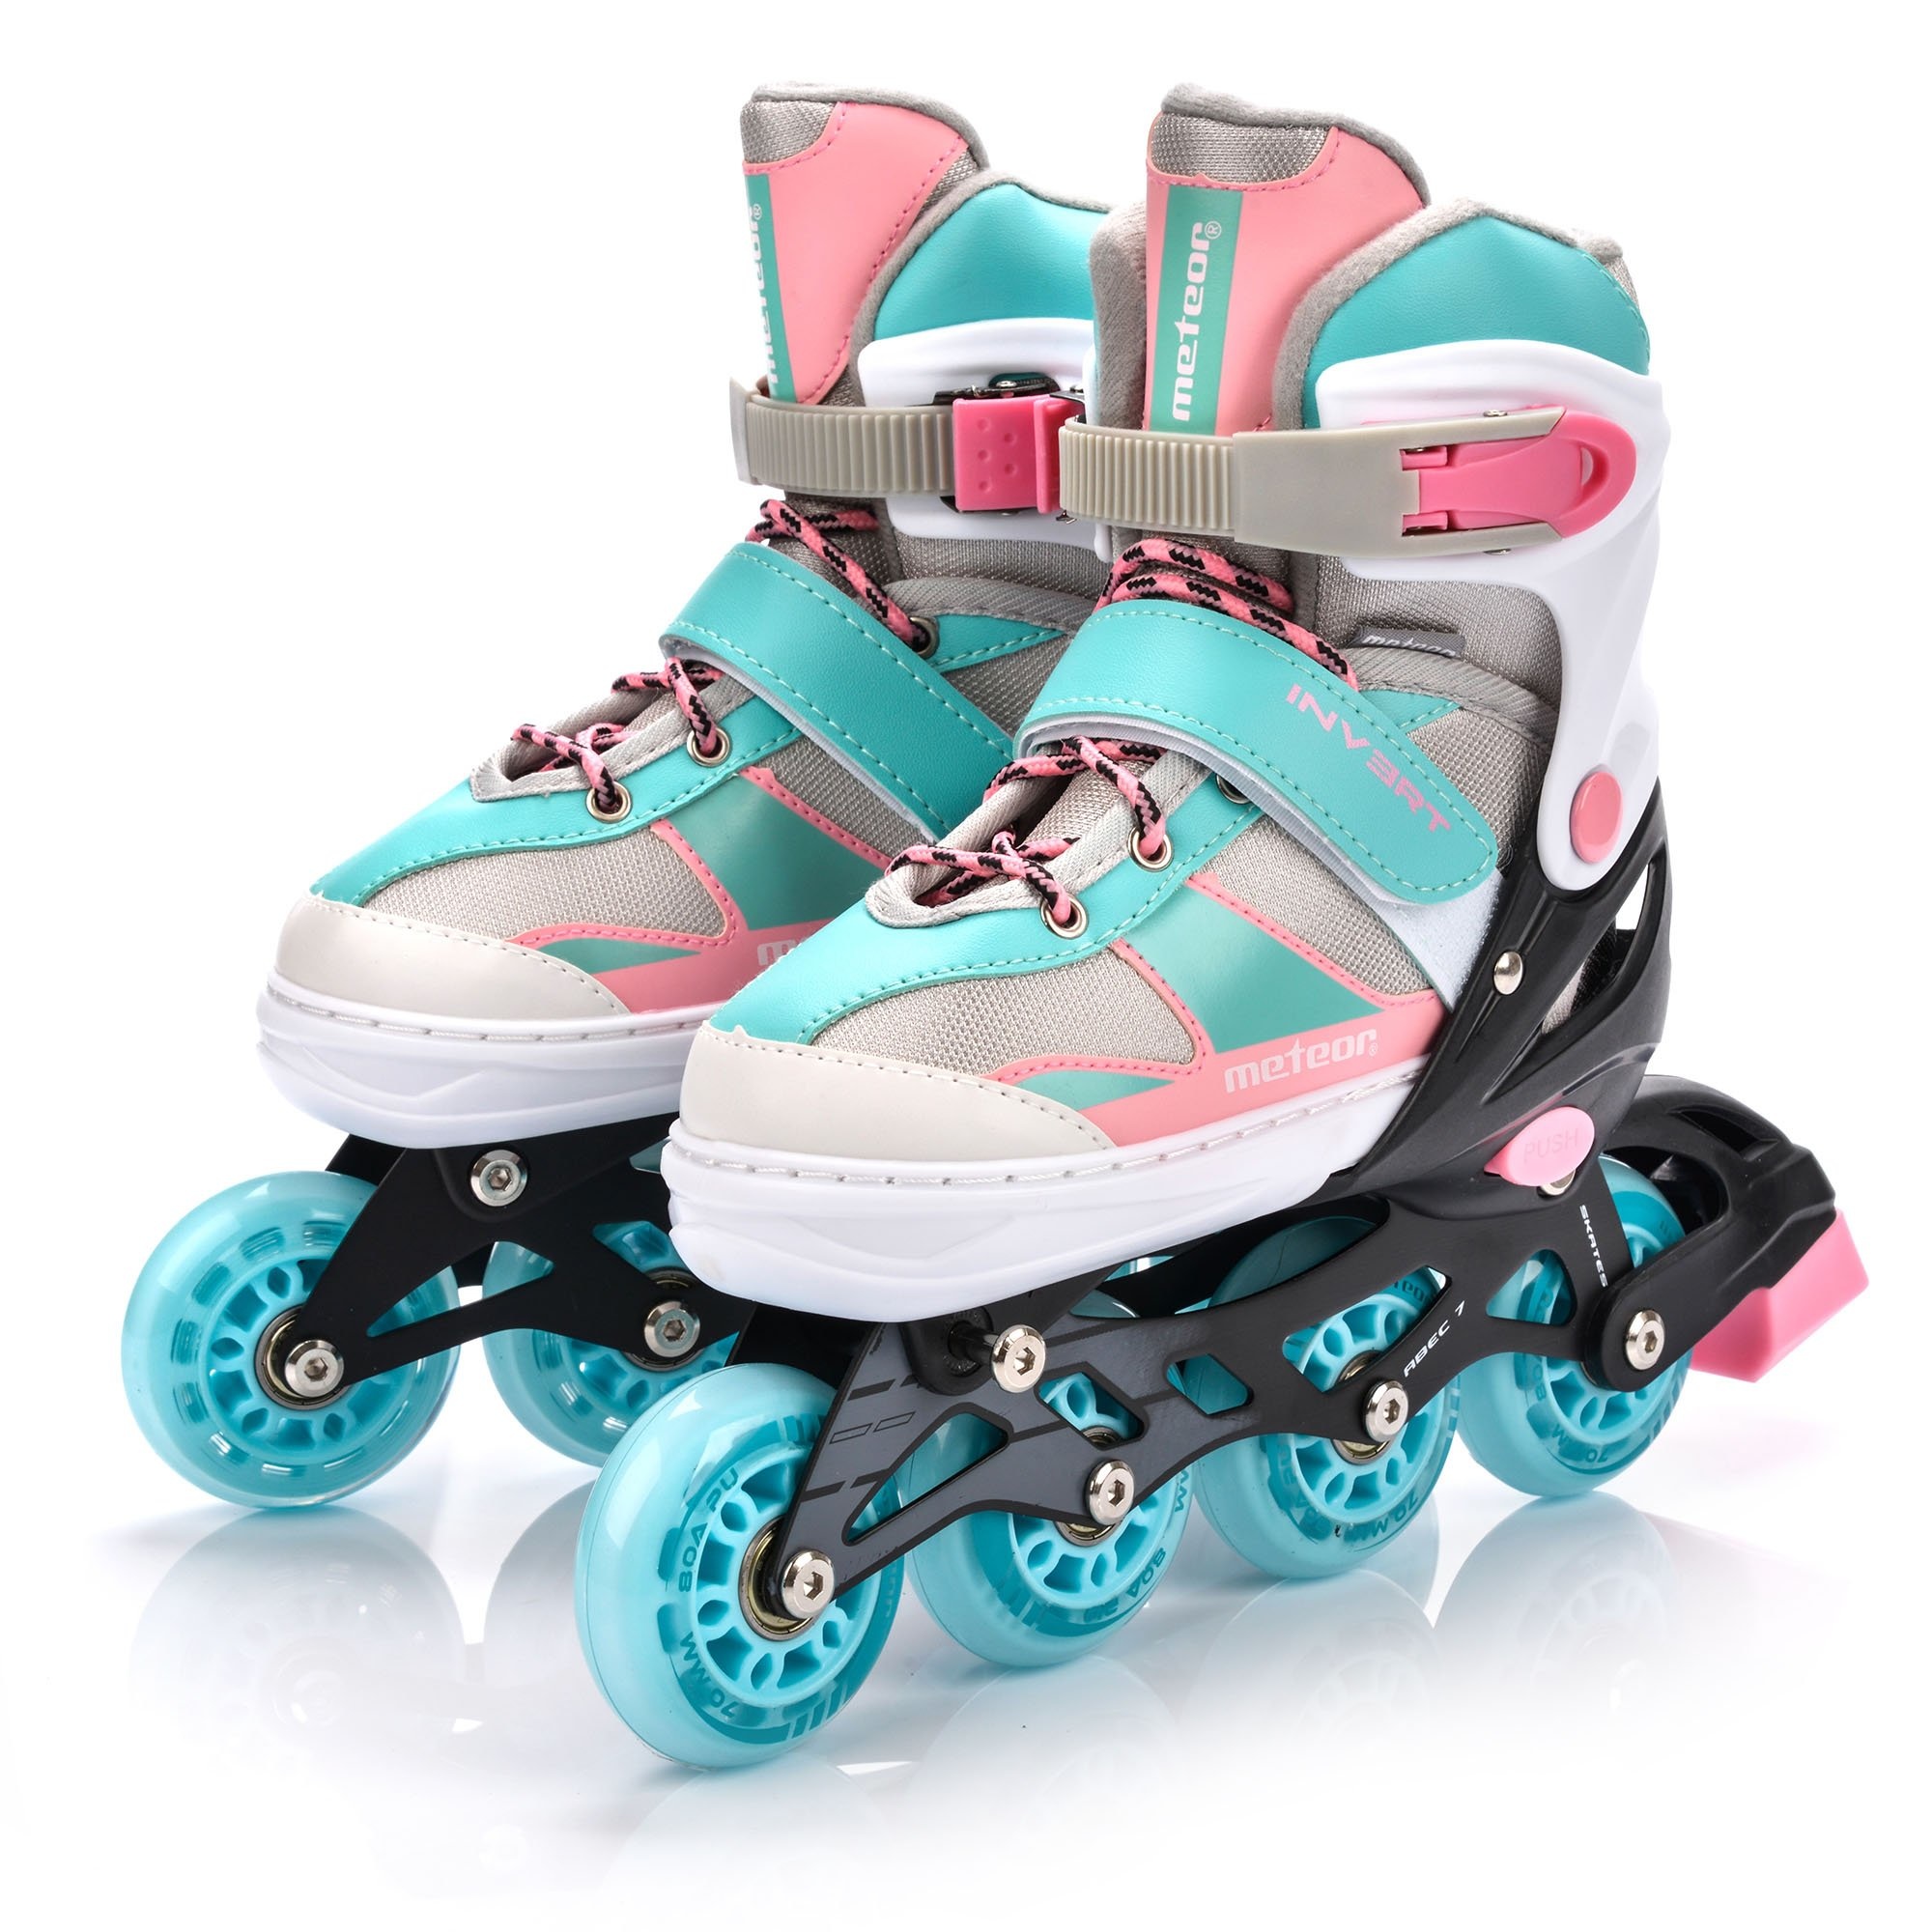 Schlittschuhe Roller Skates Inliner METEOR 2in1 KINDER Rollschuhe 